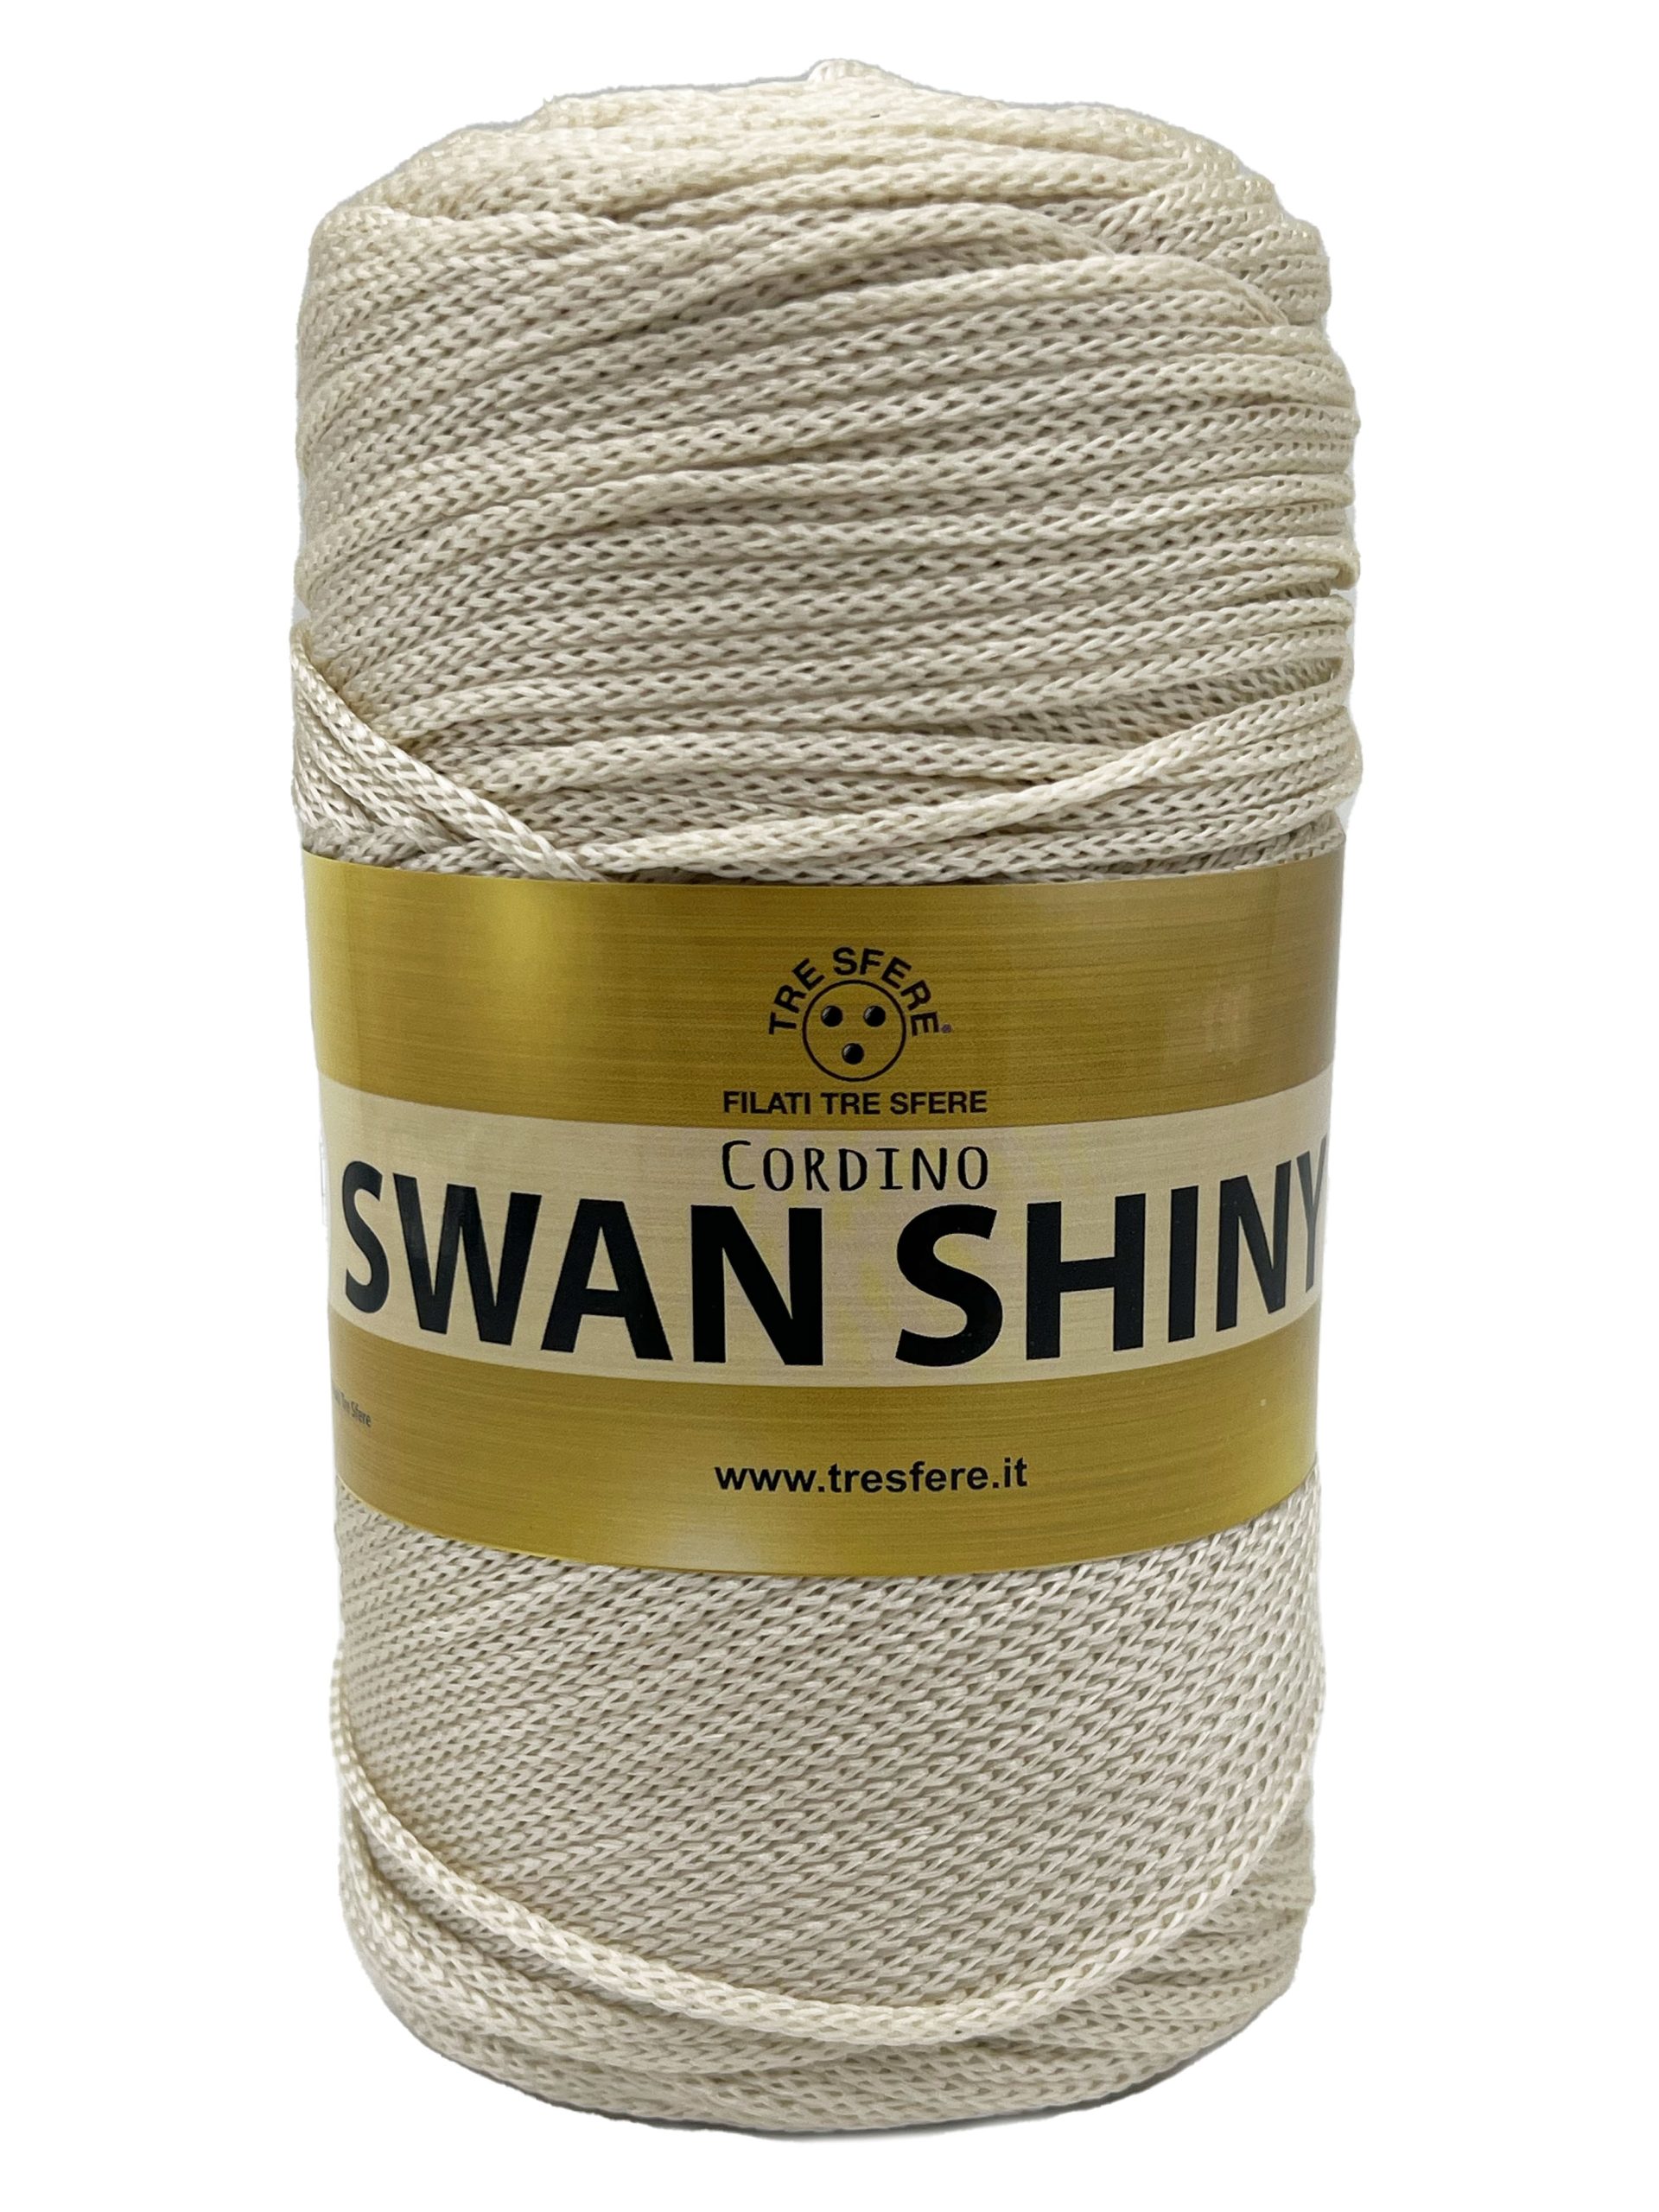 CORDINO SWAN SHINY 100% Polipropilene 250 Grammi - TresfereShop